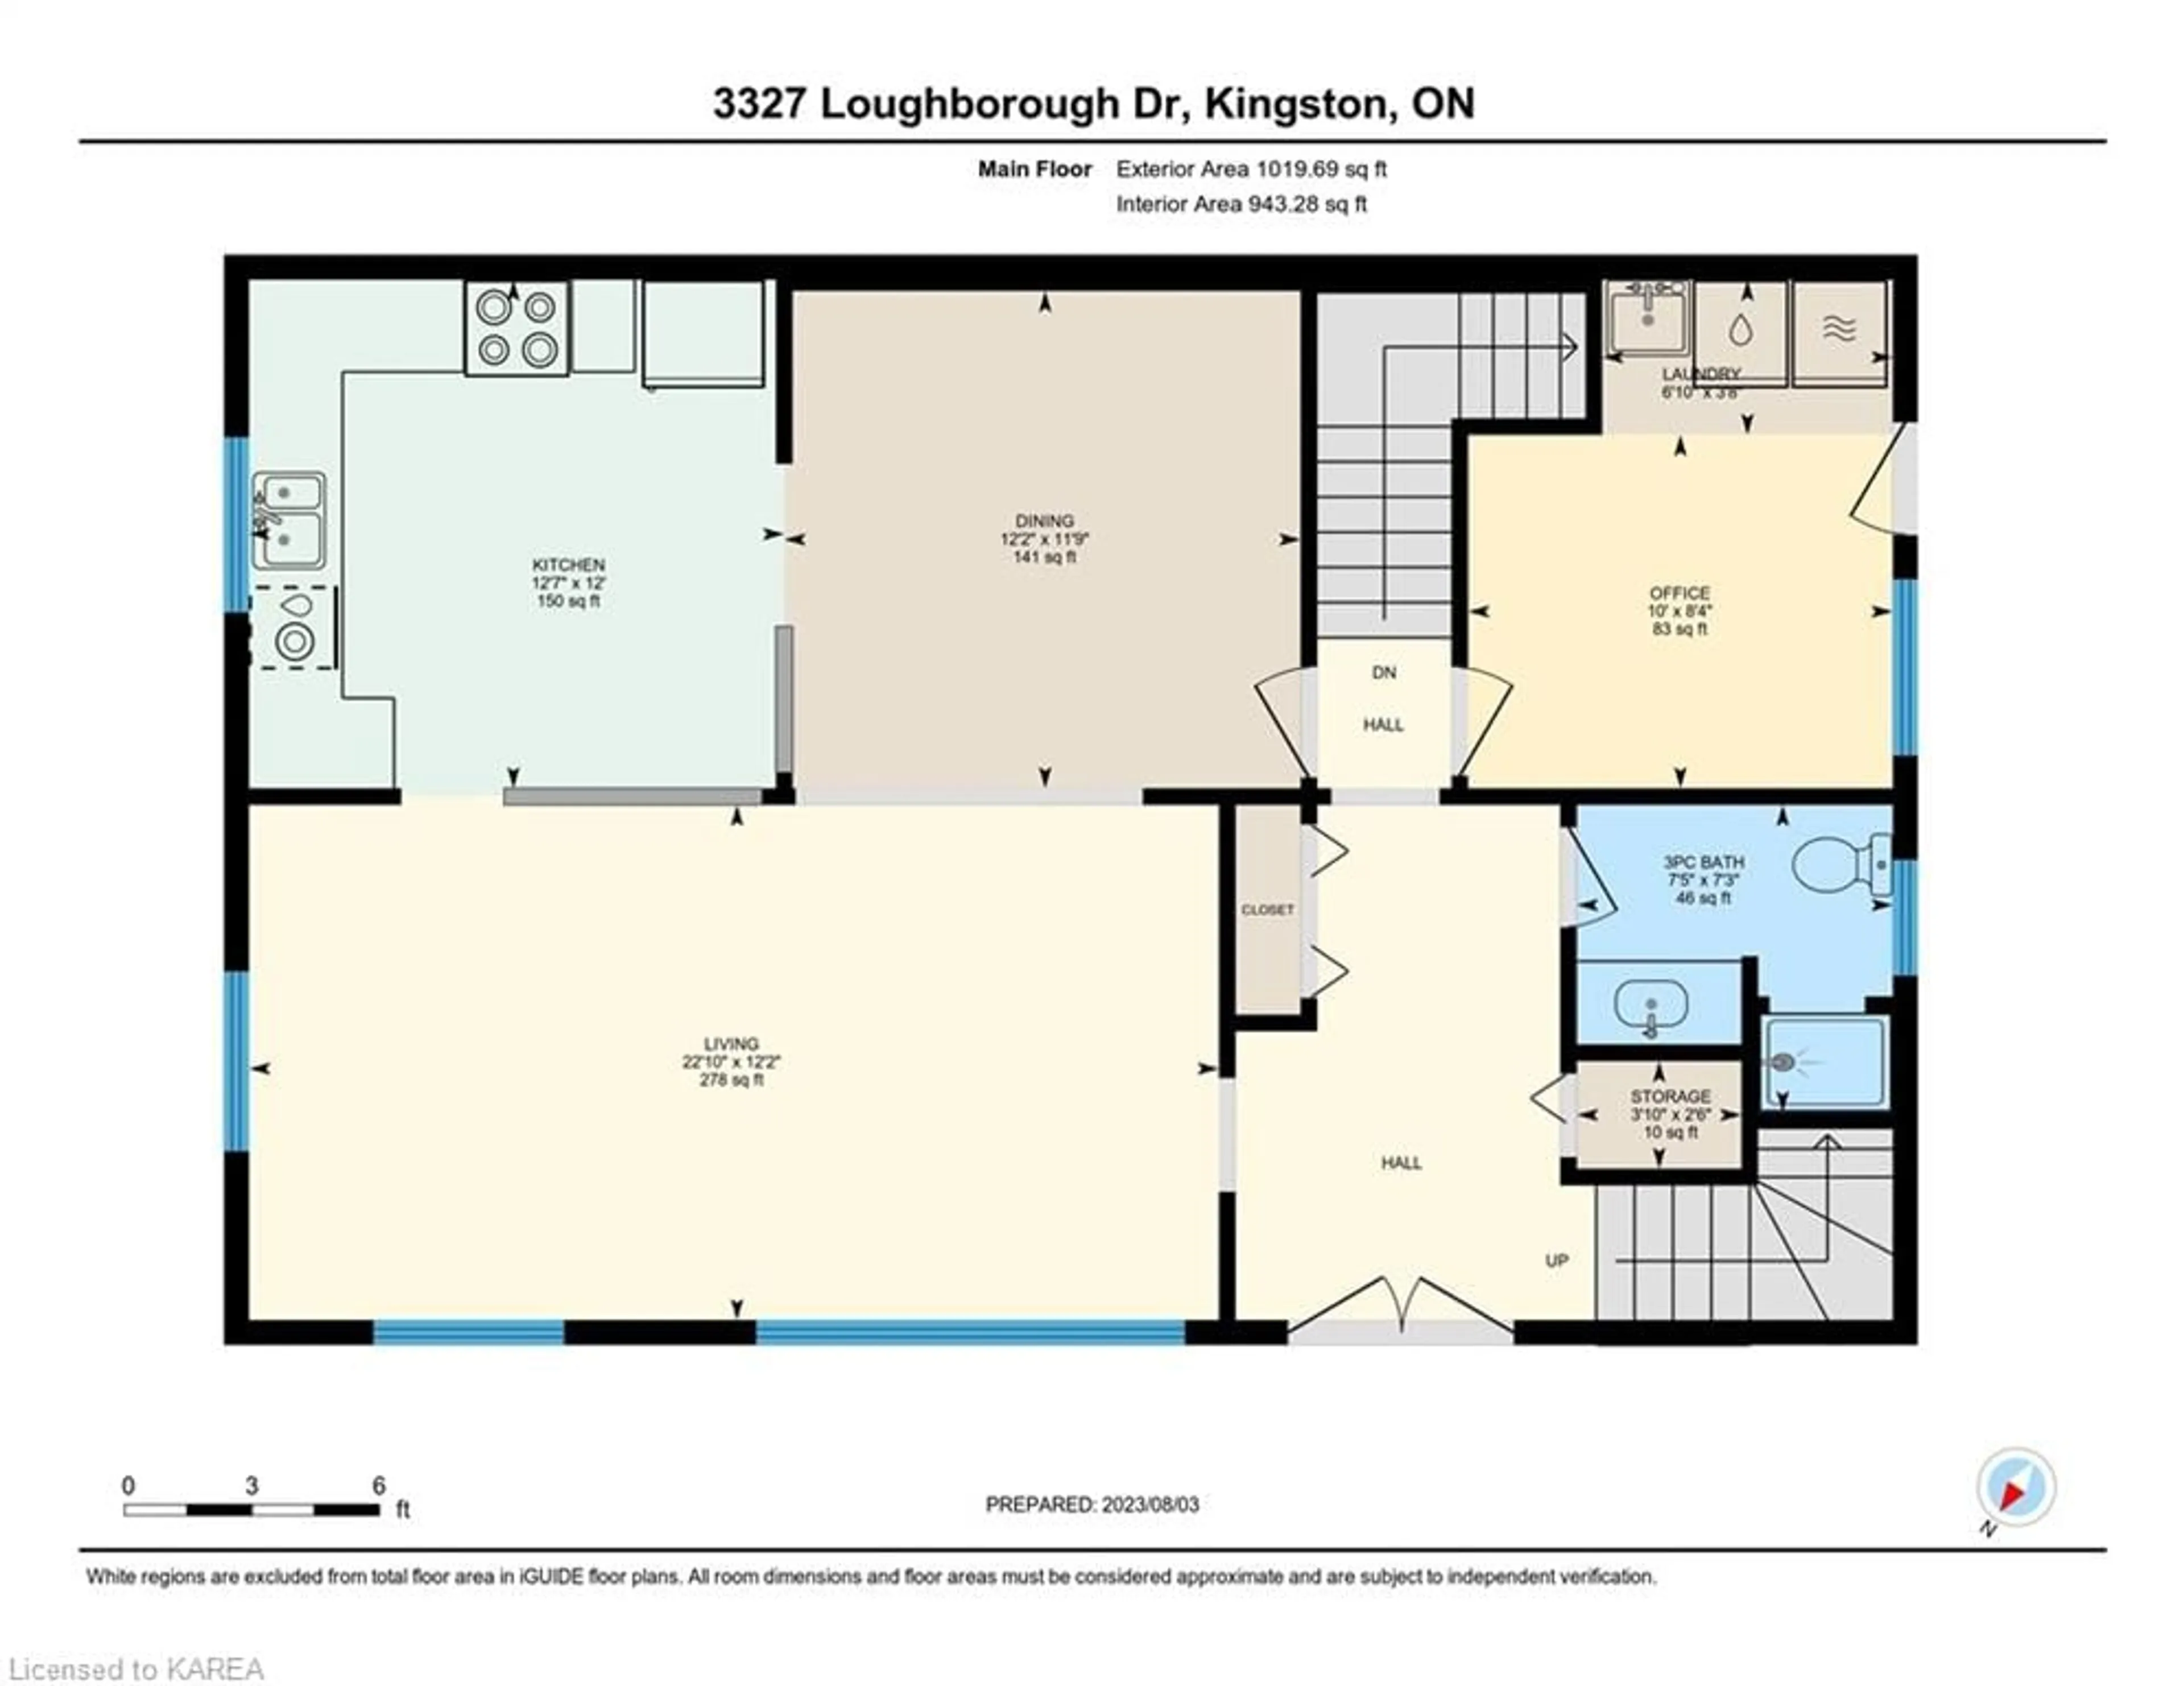 Floor plan for 3327 Loughborough Dr, Elginburg Ontario K0H 1M0